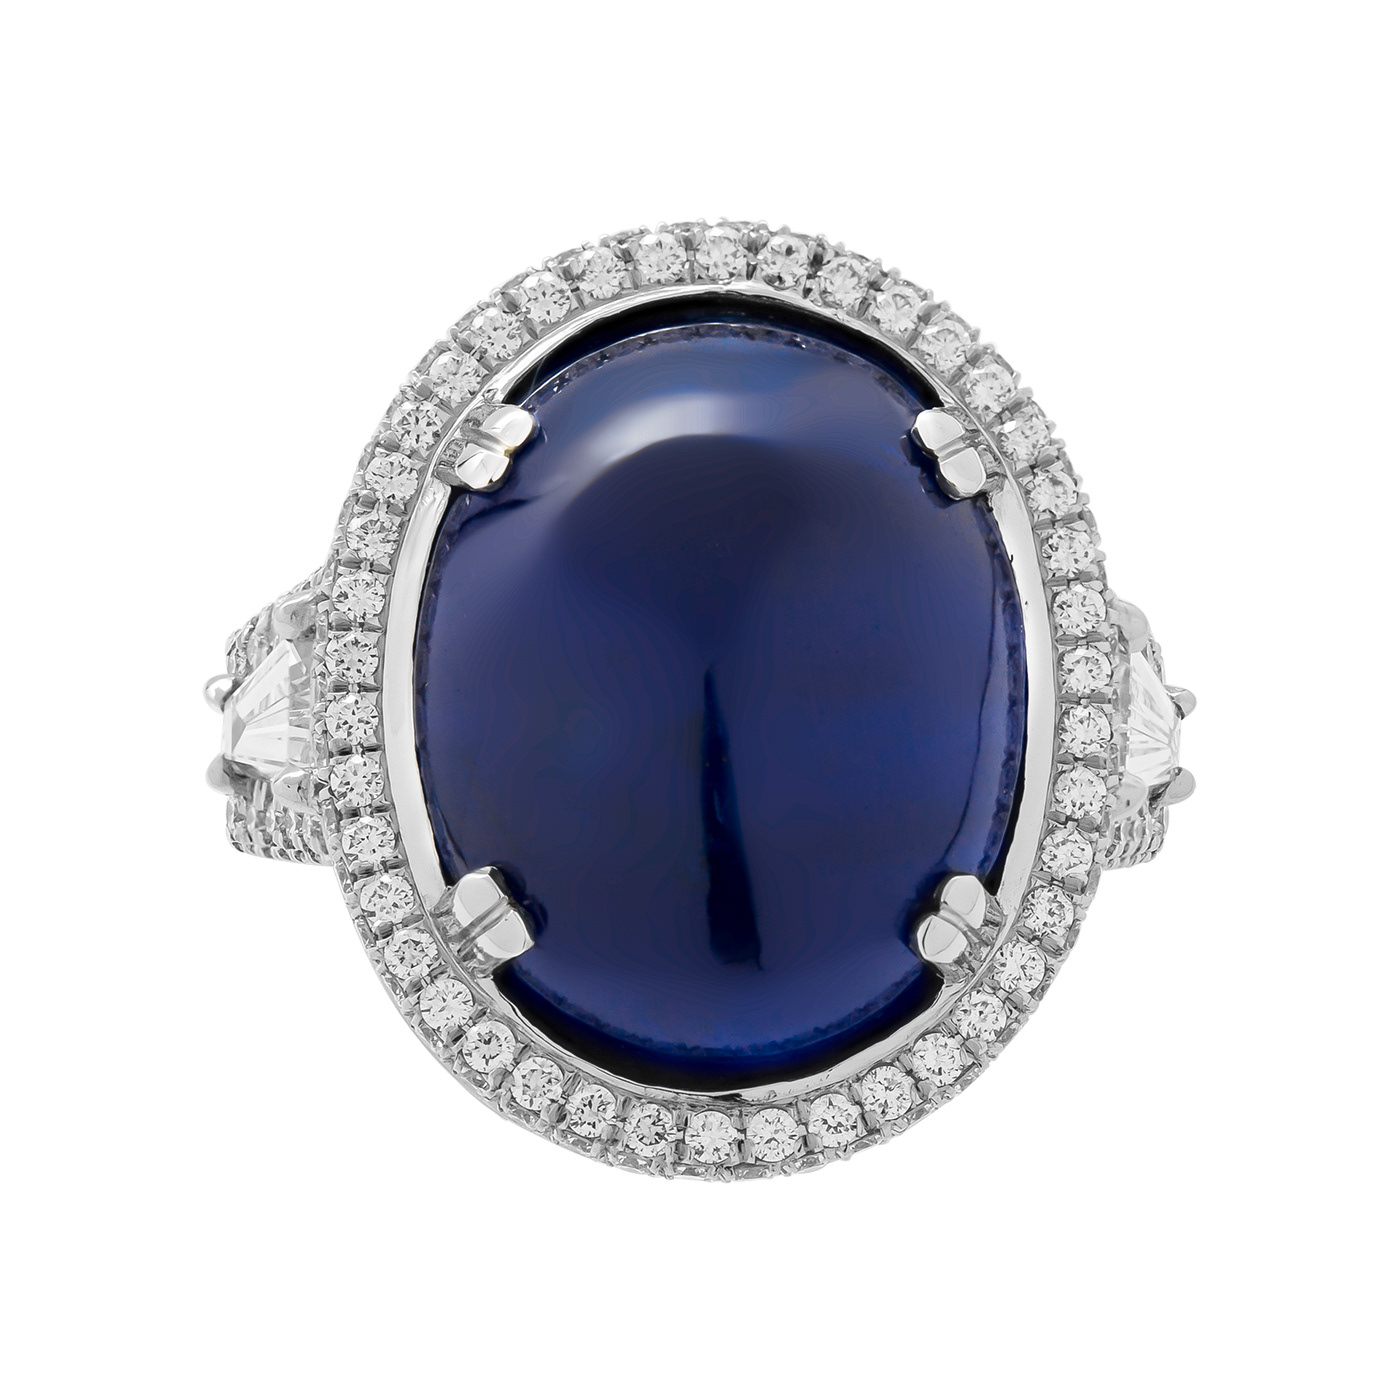 #3dmodeling #Design #designer #jewelry #saphire #3ddesign #baroque #cocktailring #conceptdesign #diamonds #ring